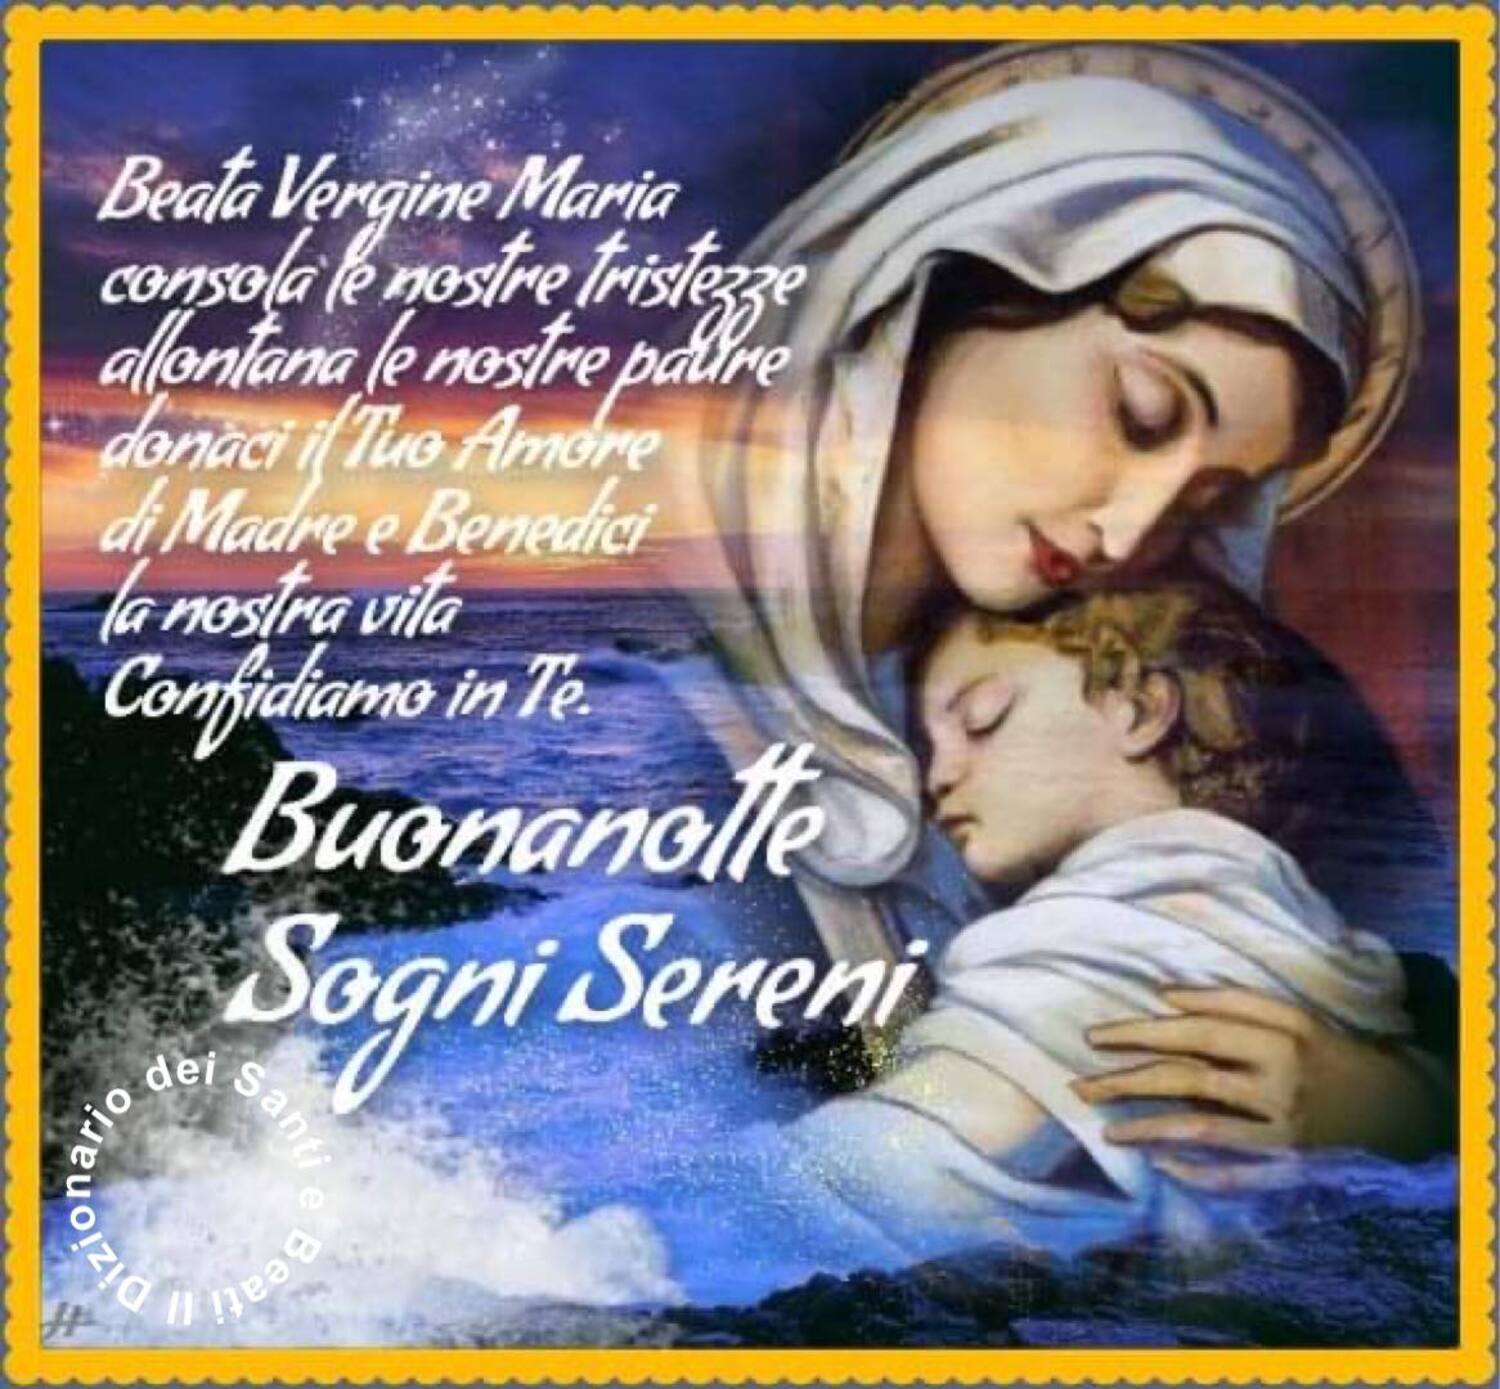 Beata Vergine Maria consola le nostre tristezze buonanotte sogni d